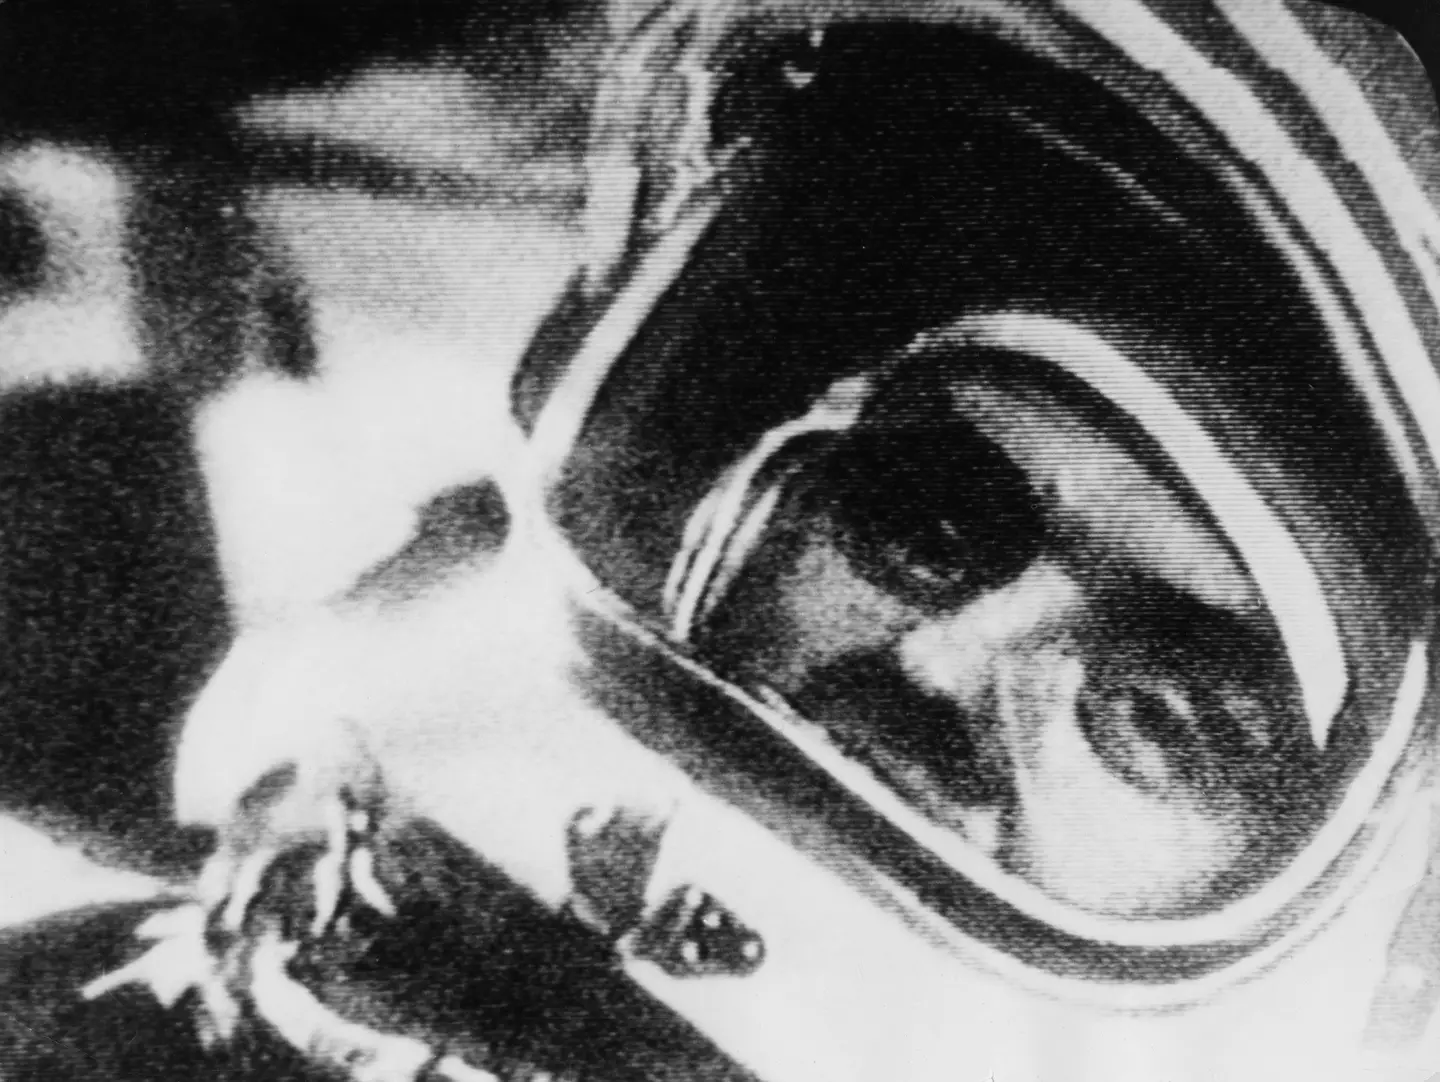 Vladimir Mikhaylovich Komarov was the first man to die from a space flight.